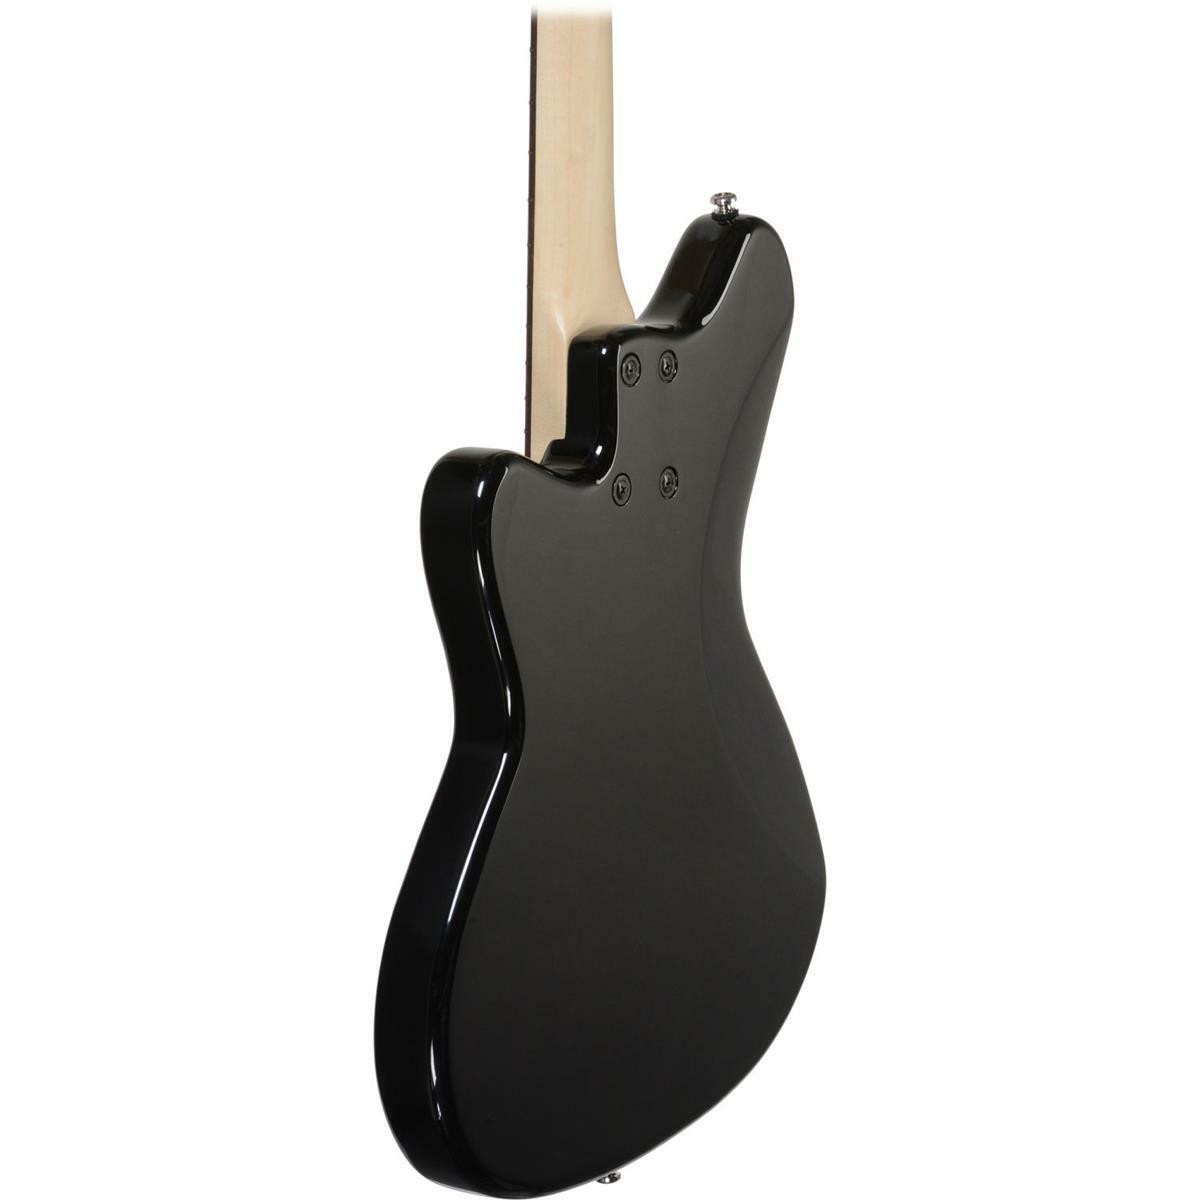 Ibanez Talman Series TMB30 Electric Bass Guitar, Rosewood Fretboard, Black